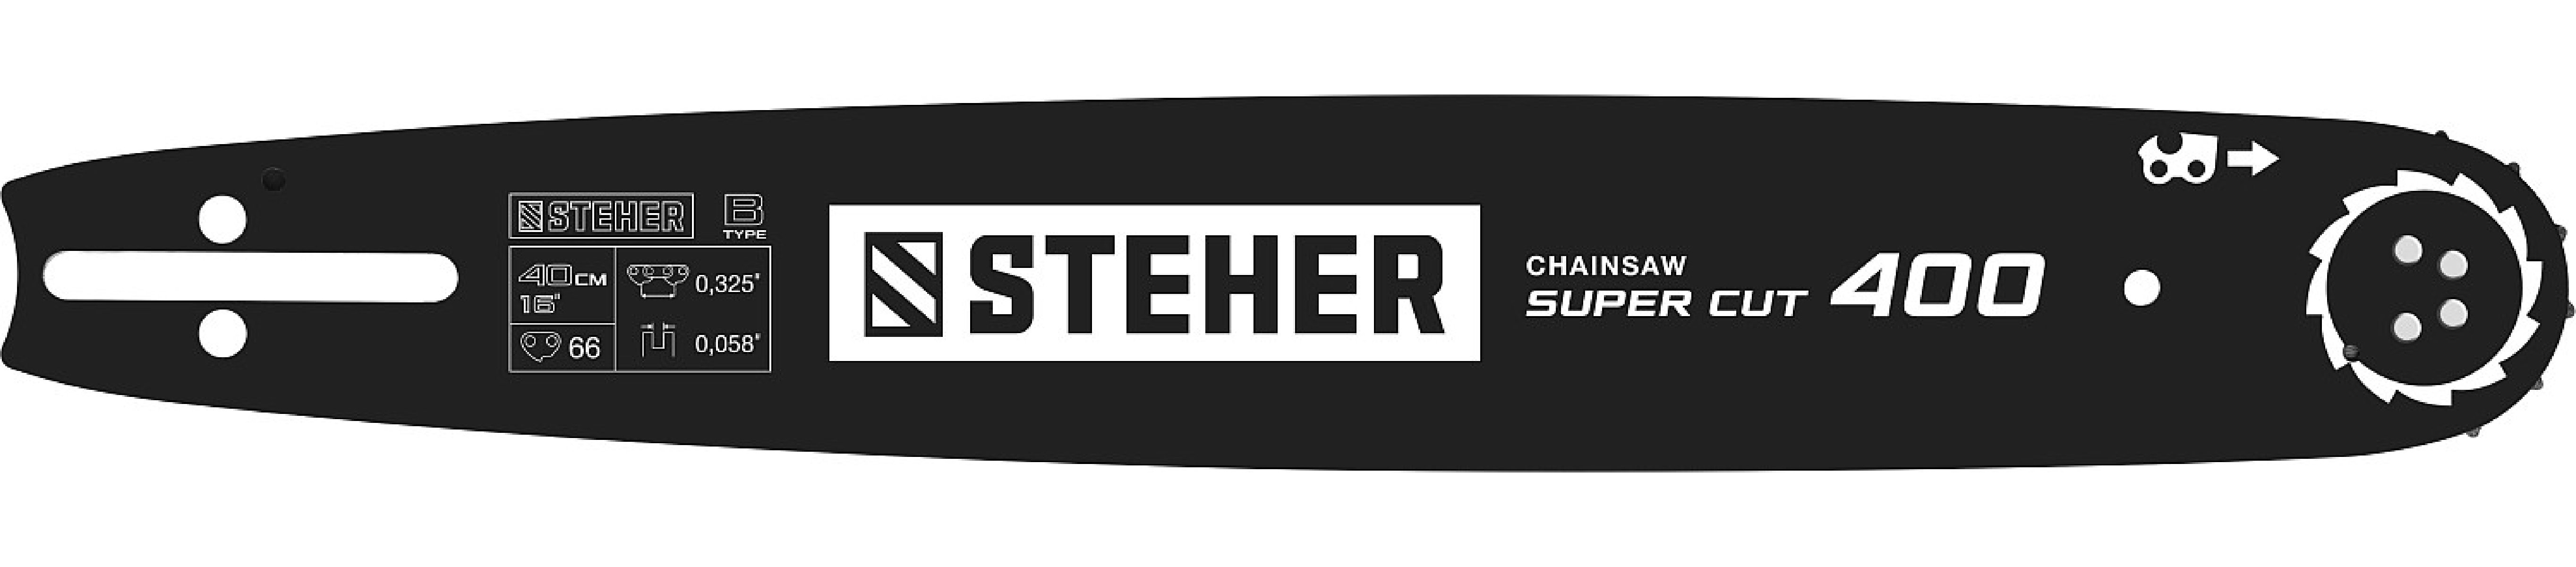 STEHER type B  0.325  1.5  40     (75202-40)